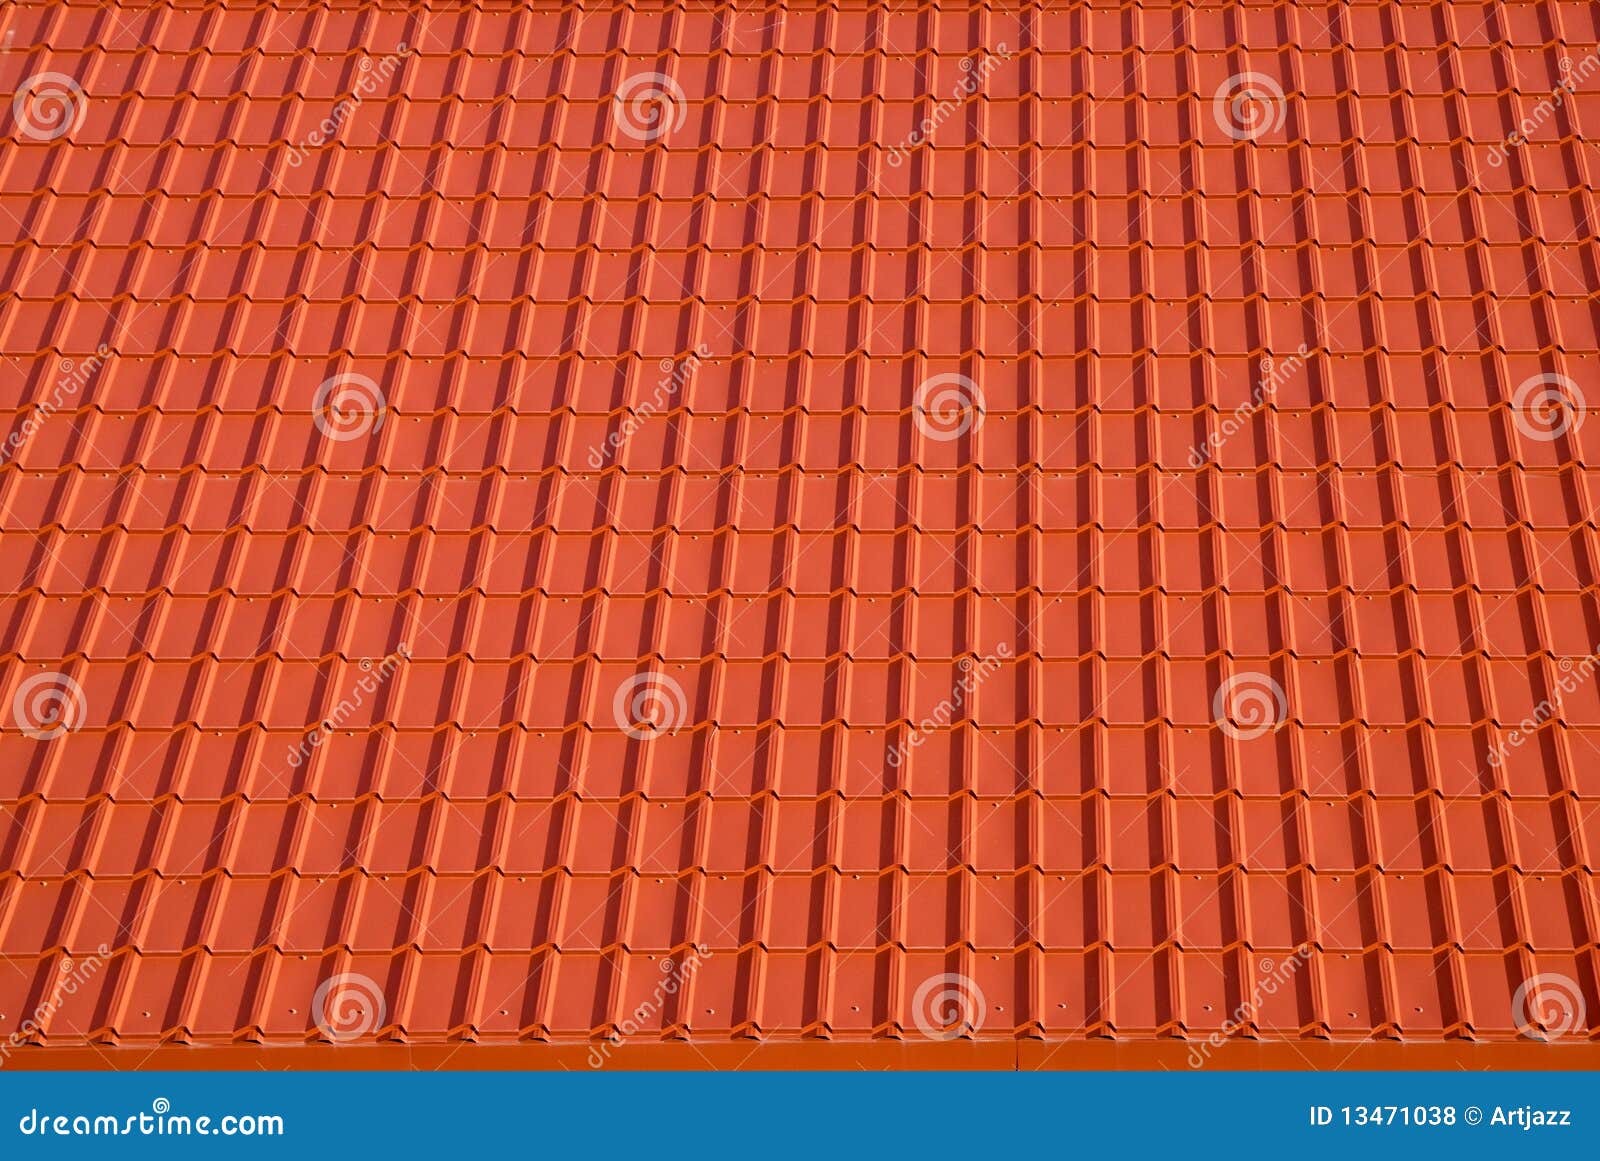 Orange roof tile stock photo. Image of metal, light, property - 13471038